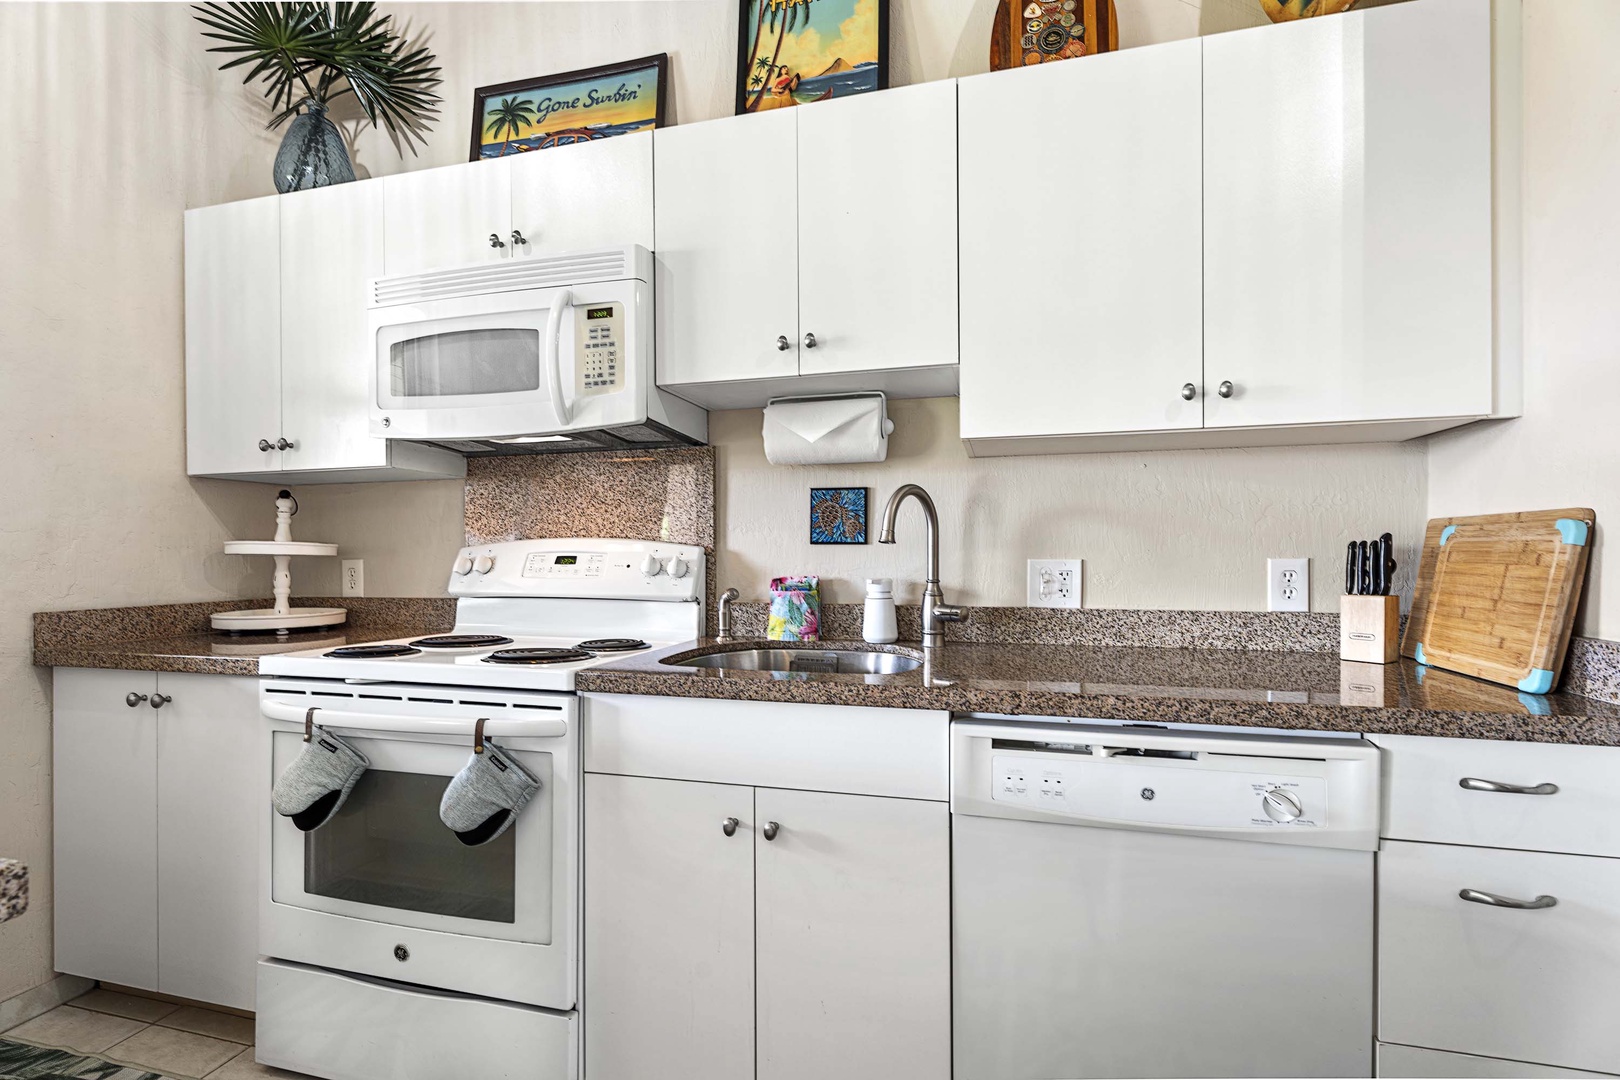 Kailua Kona Vacation Rentals, Kona Makai 6303 - White finish cabinetry and ample appliances for the kitchen area